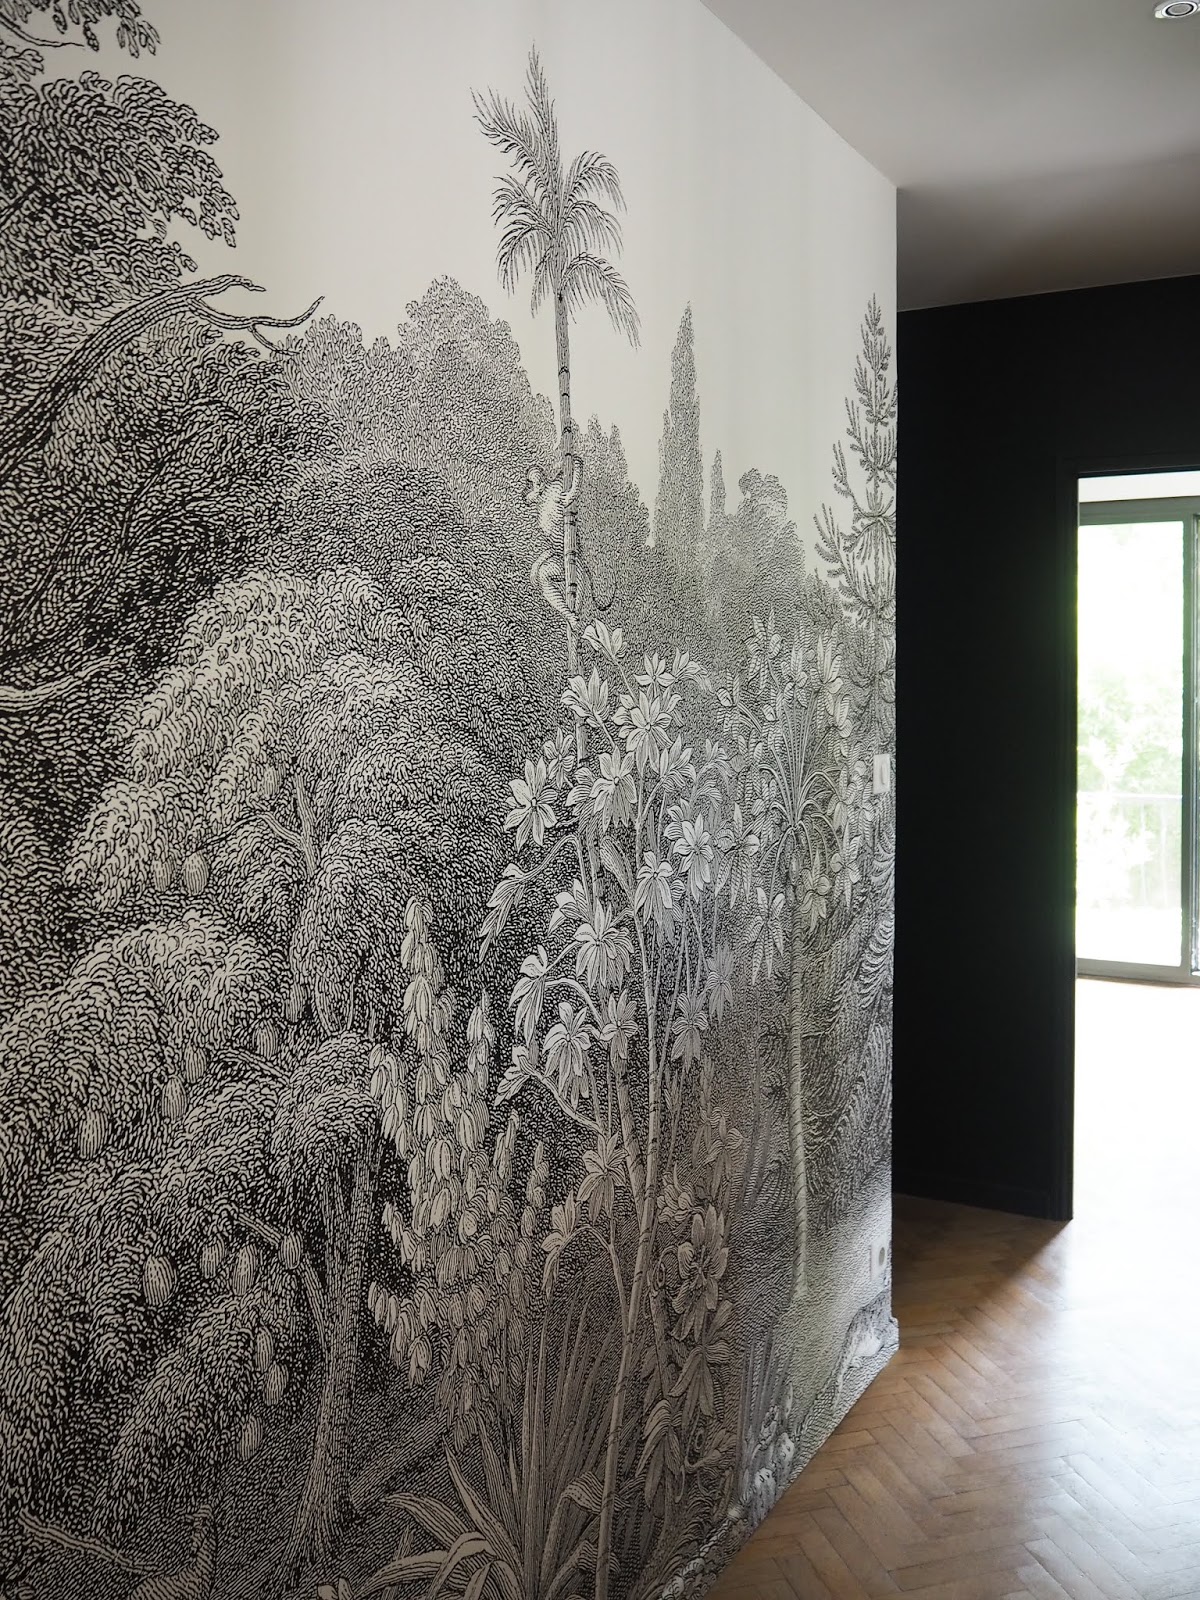 ilaria fatone x rebel walls - panoramic wallpaper in hallway 